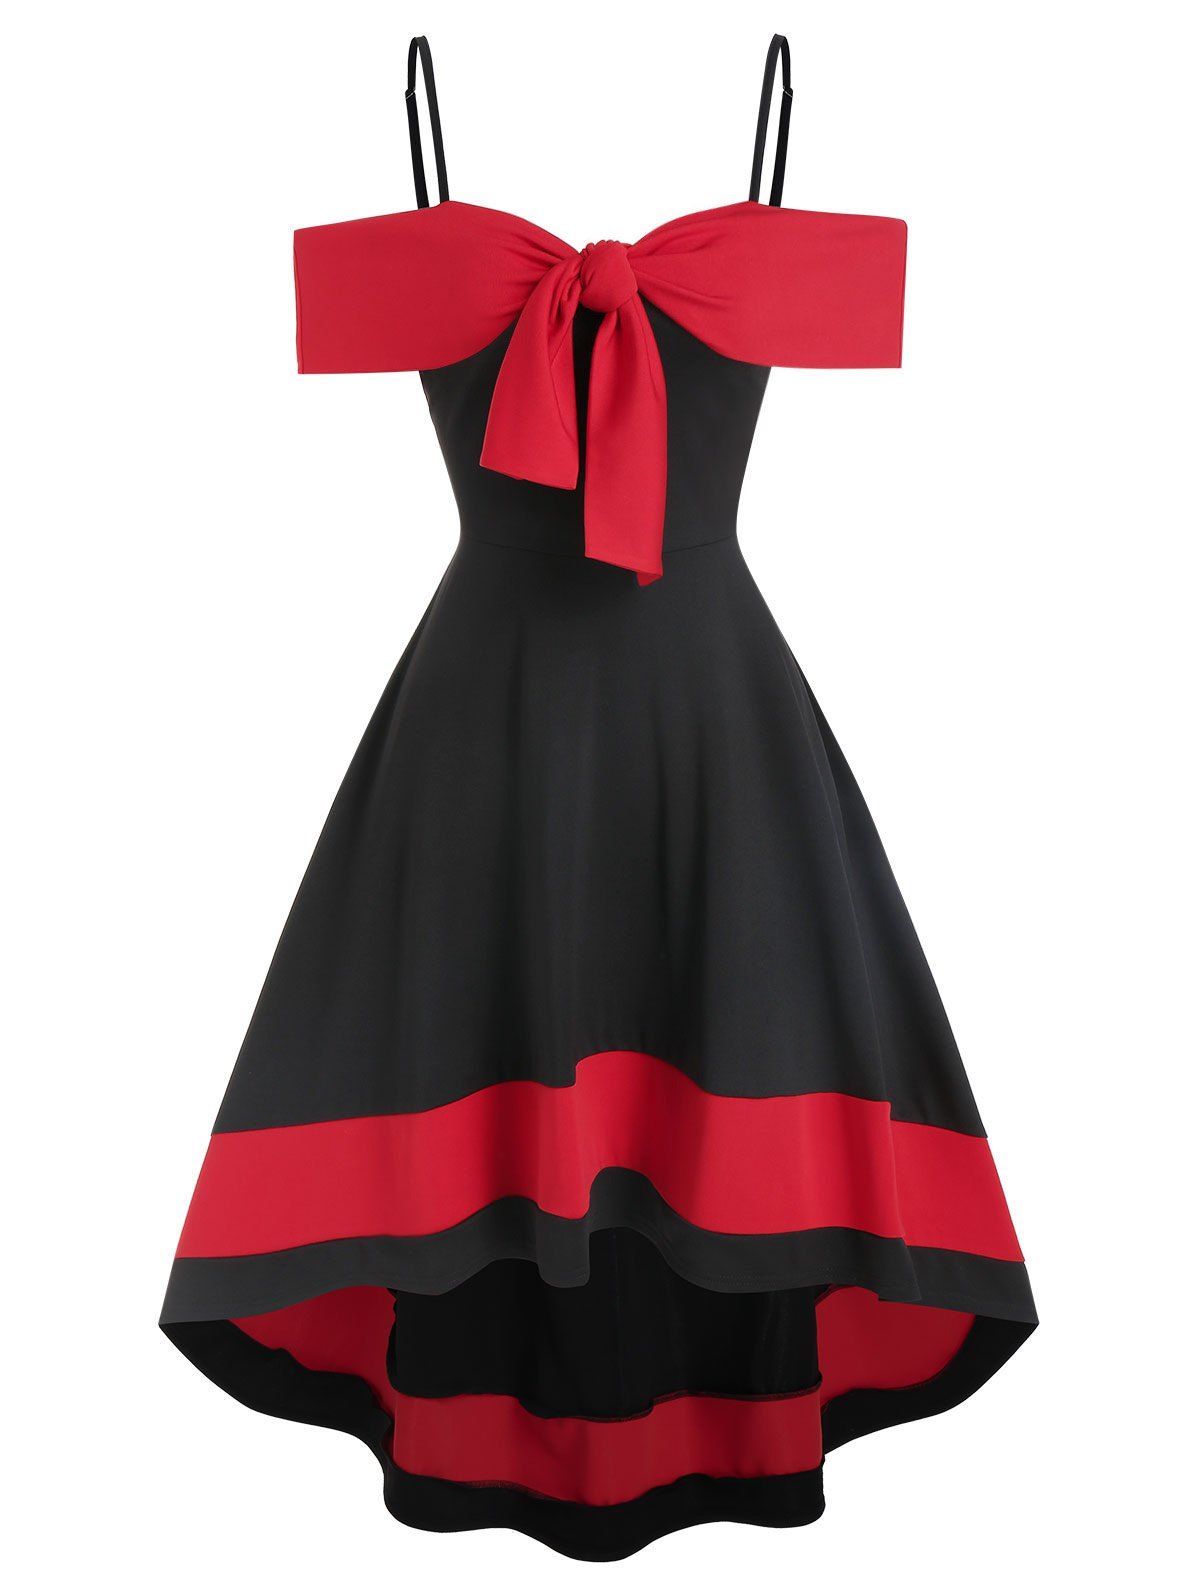 black contrast color dress